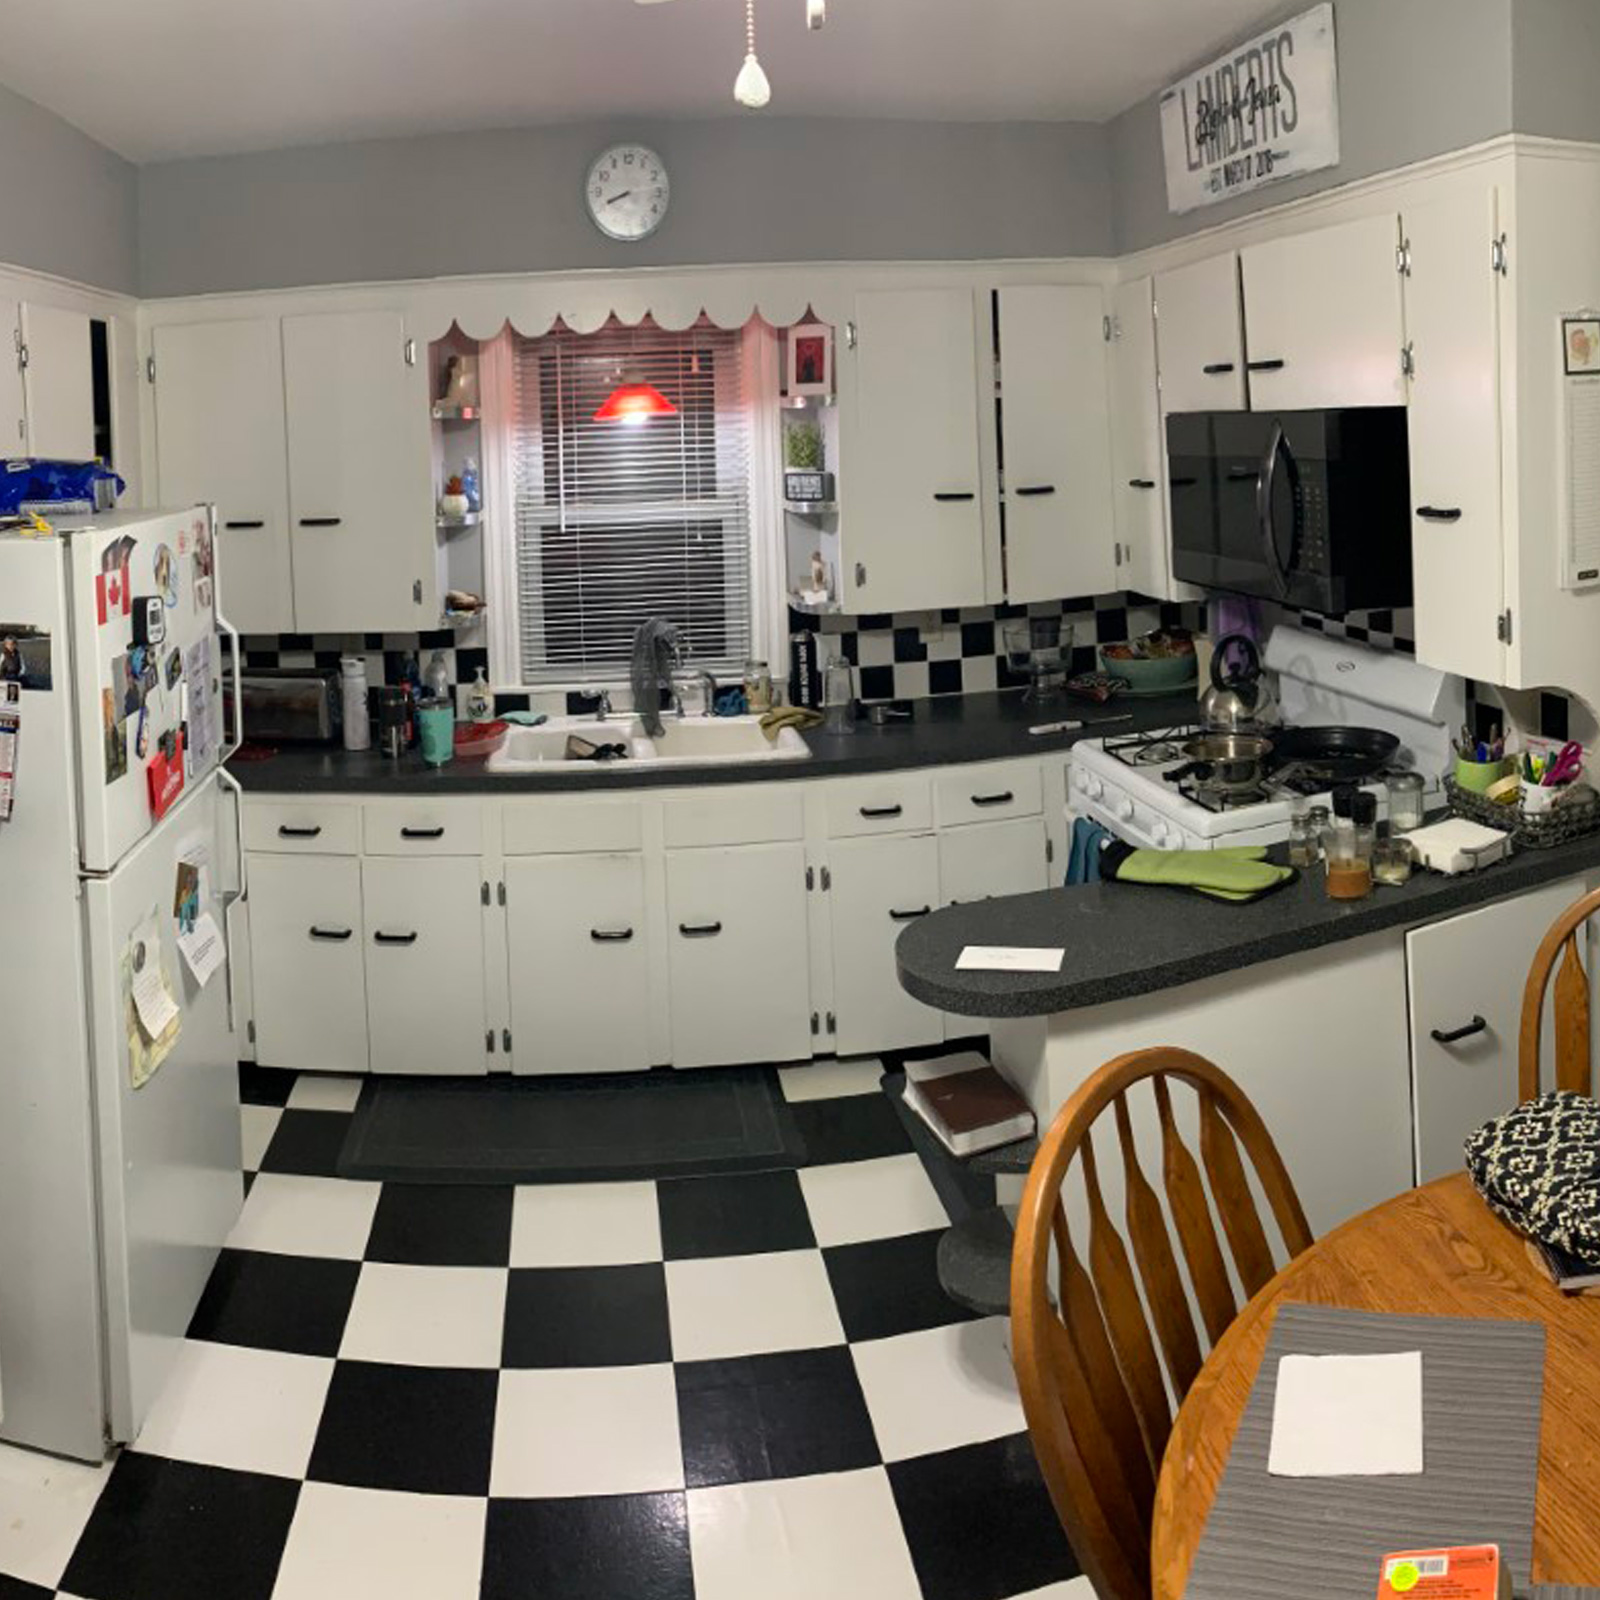 Entry 89 - Kitchen revamp time